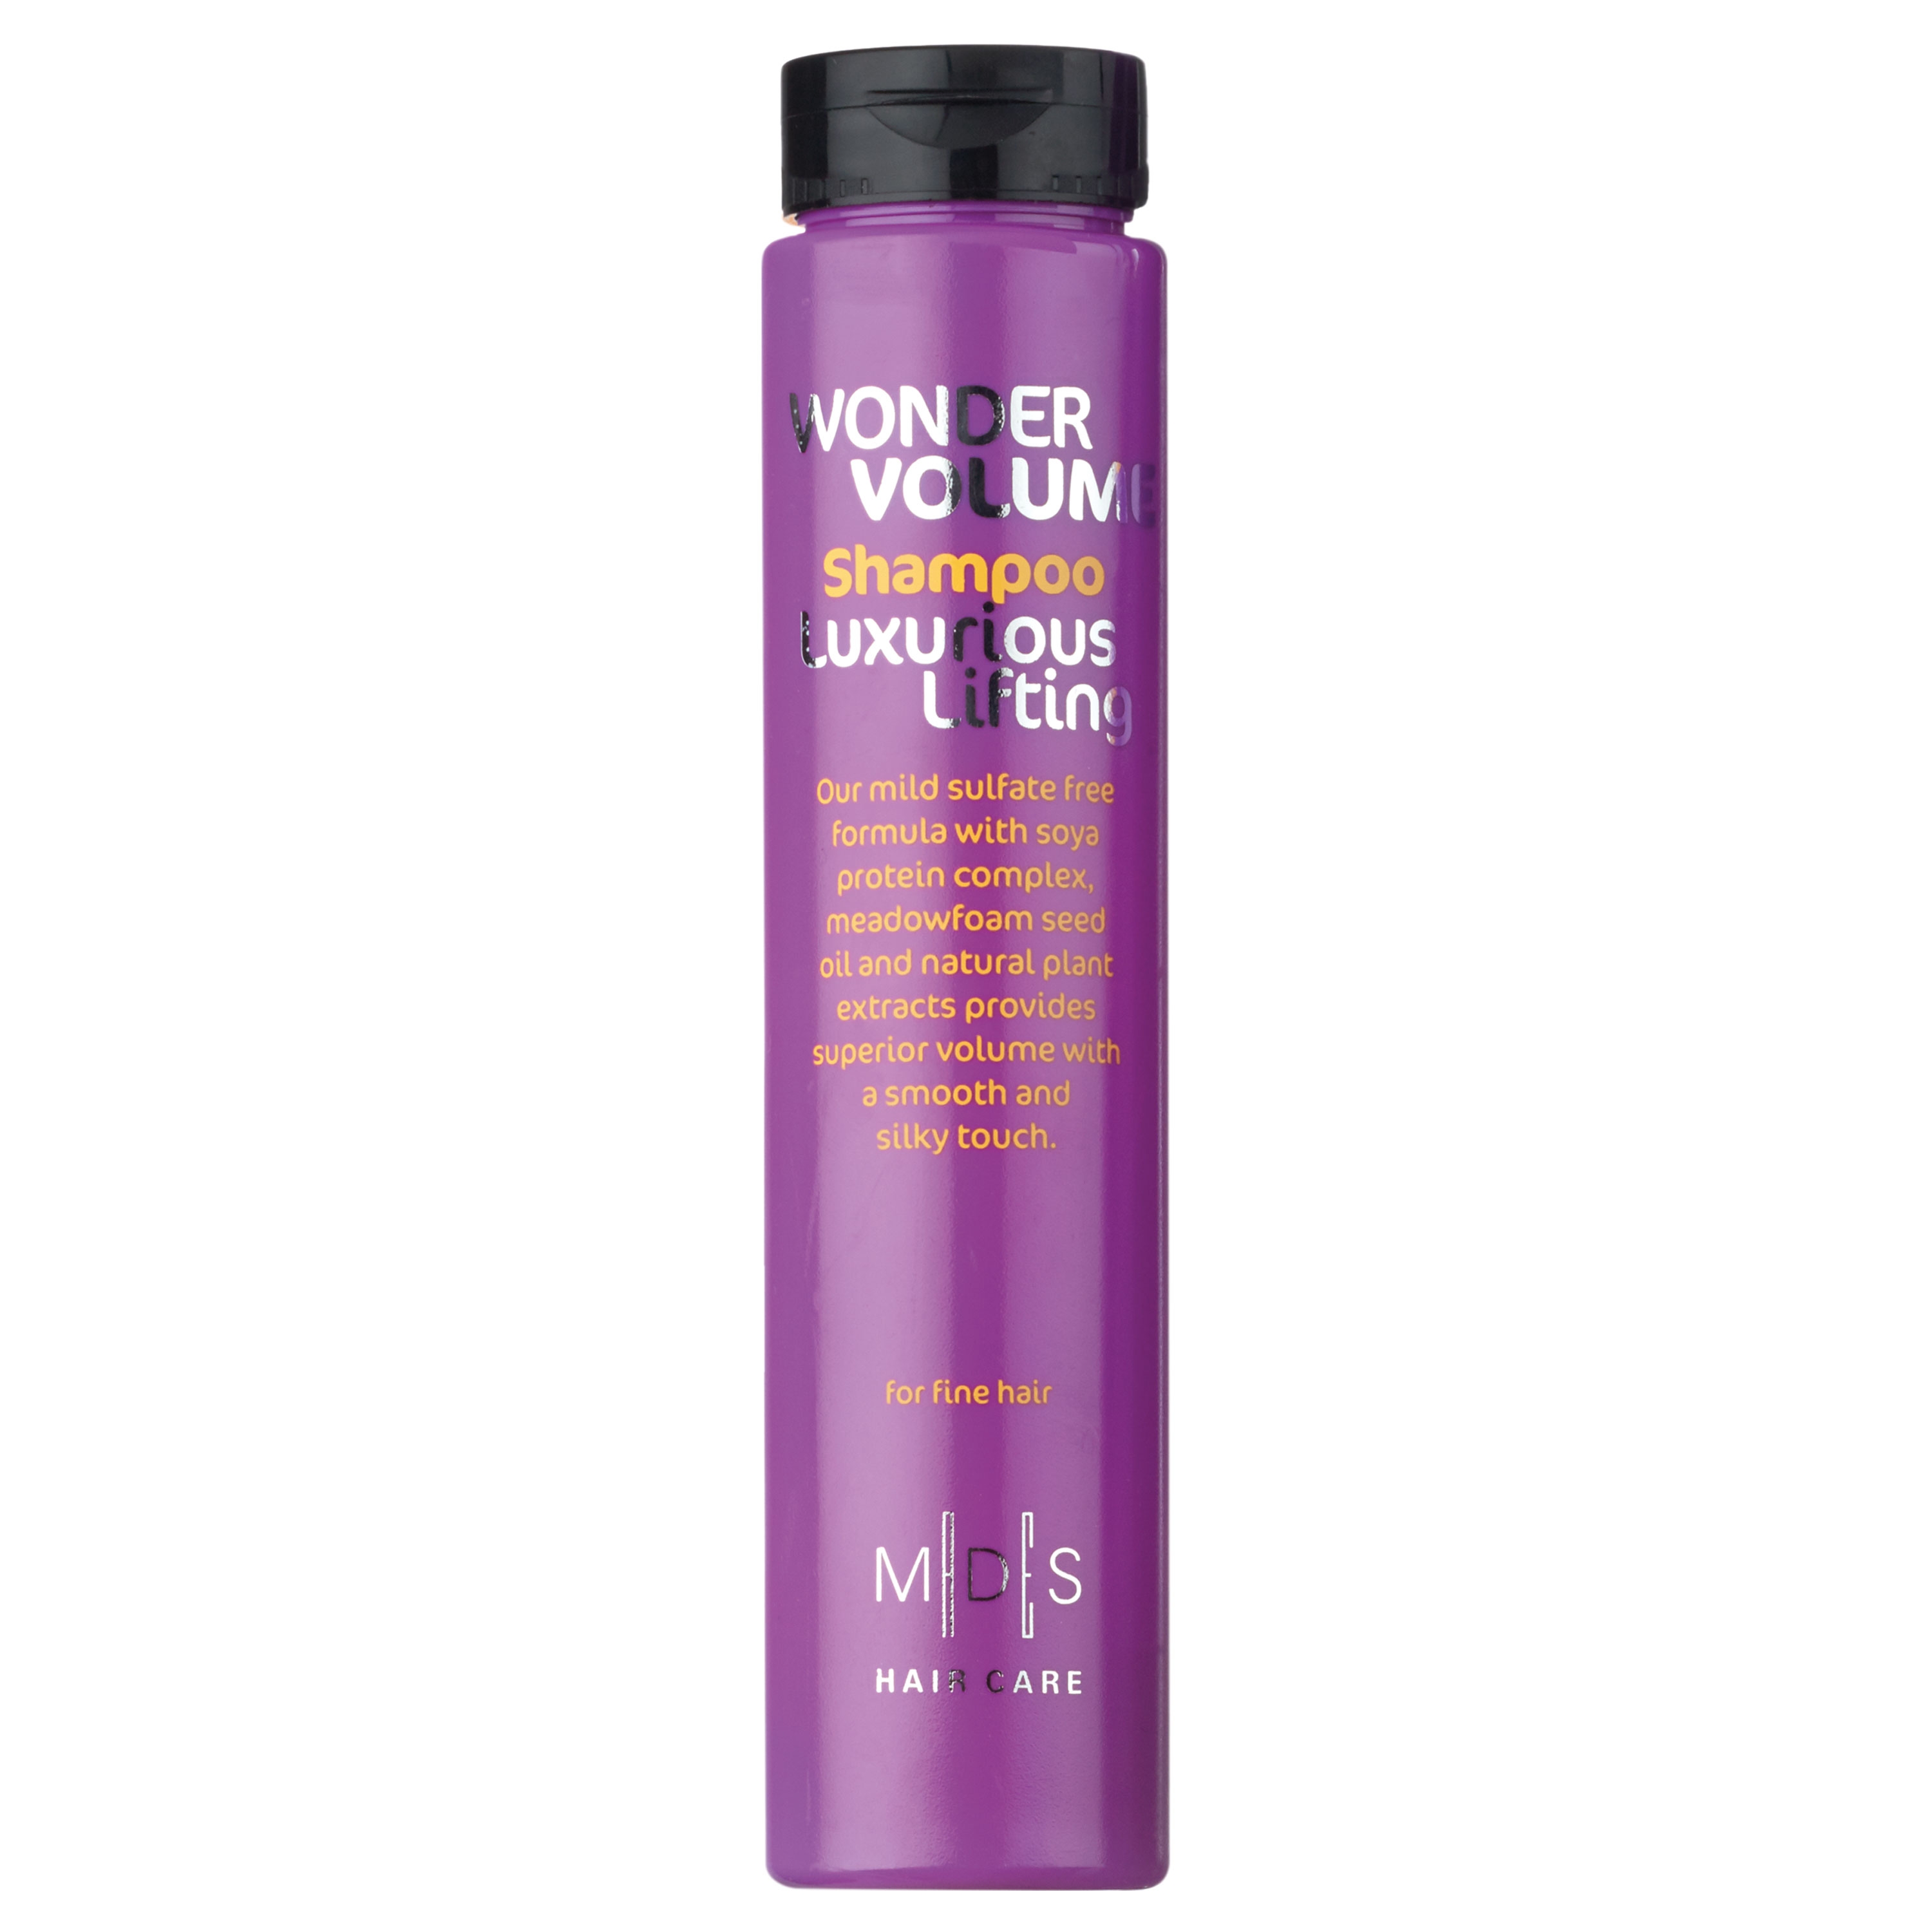 MADES | Mades Hair Care Wonder Volume Shampoo Luxurious Lifting 250ML 